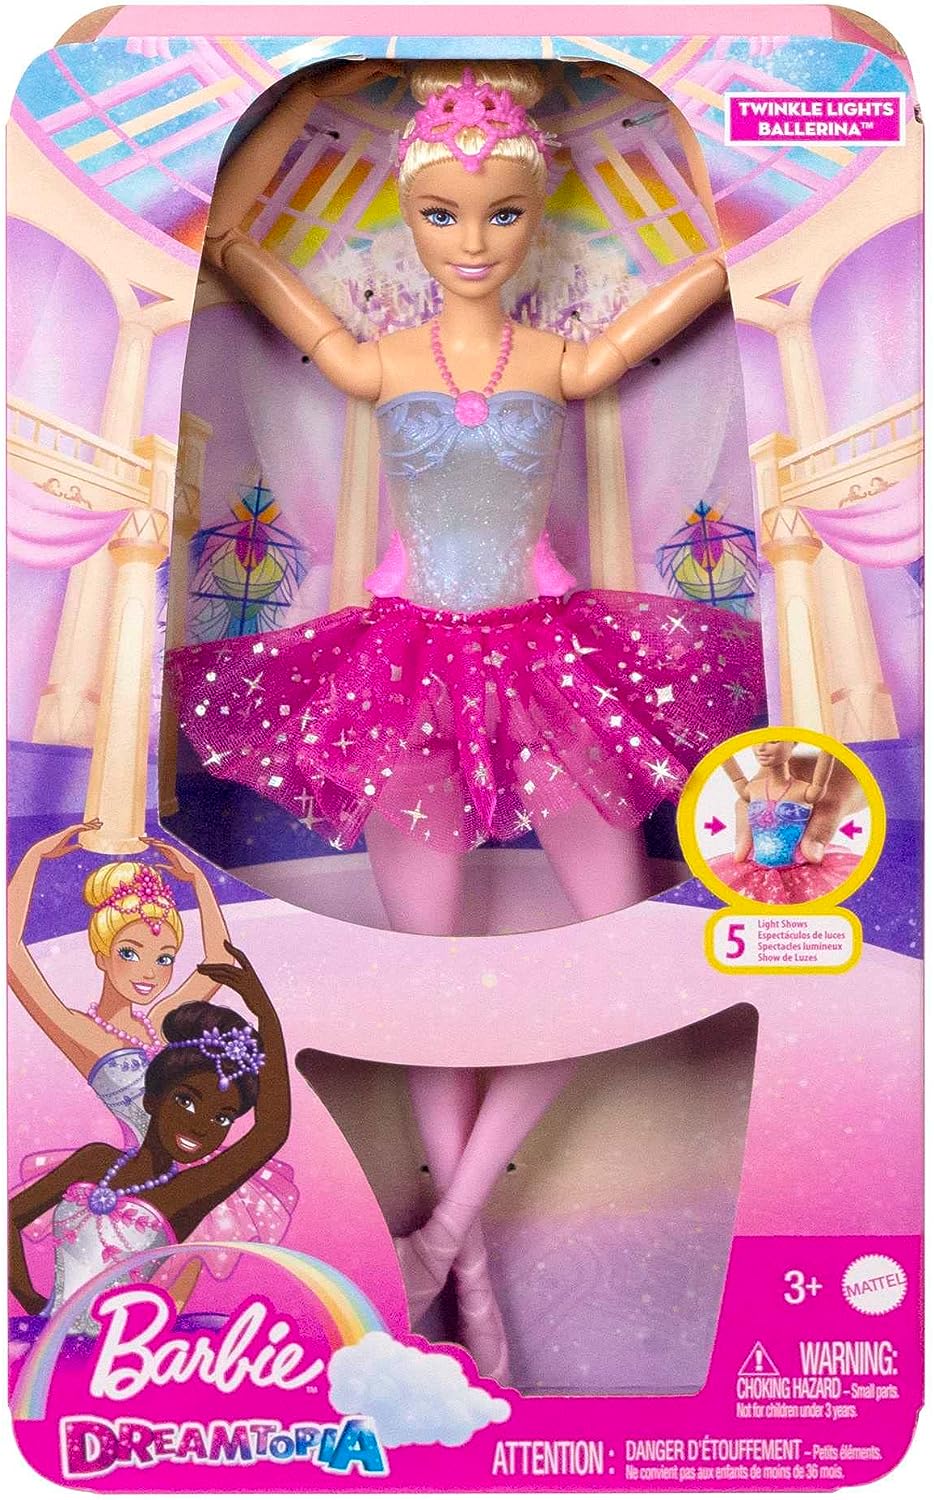 Barbie Doll | Magical Ballerina Doll | Blonde Hair | Light-Up Feature | Tiara and Pink Tutu, Ballet Dancing